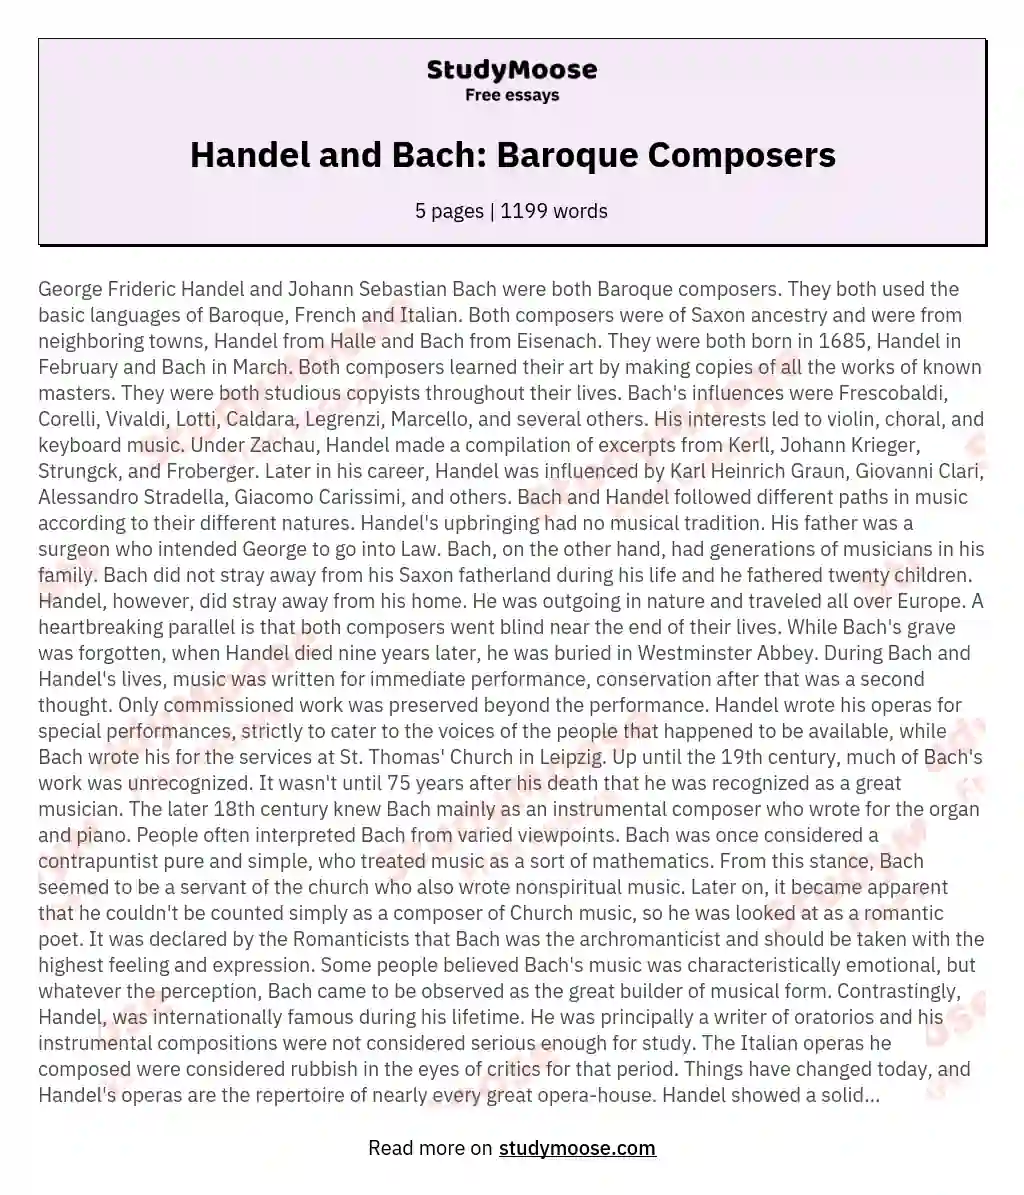 Handel and Bach: Baroque Composers essay